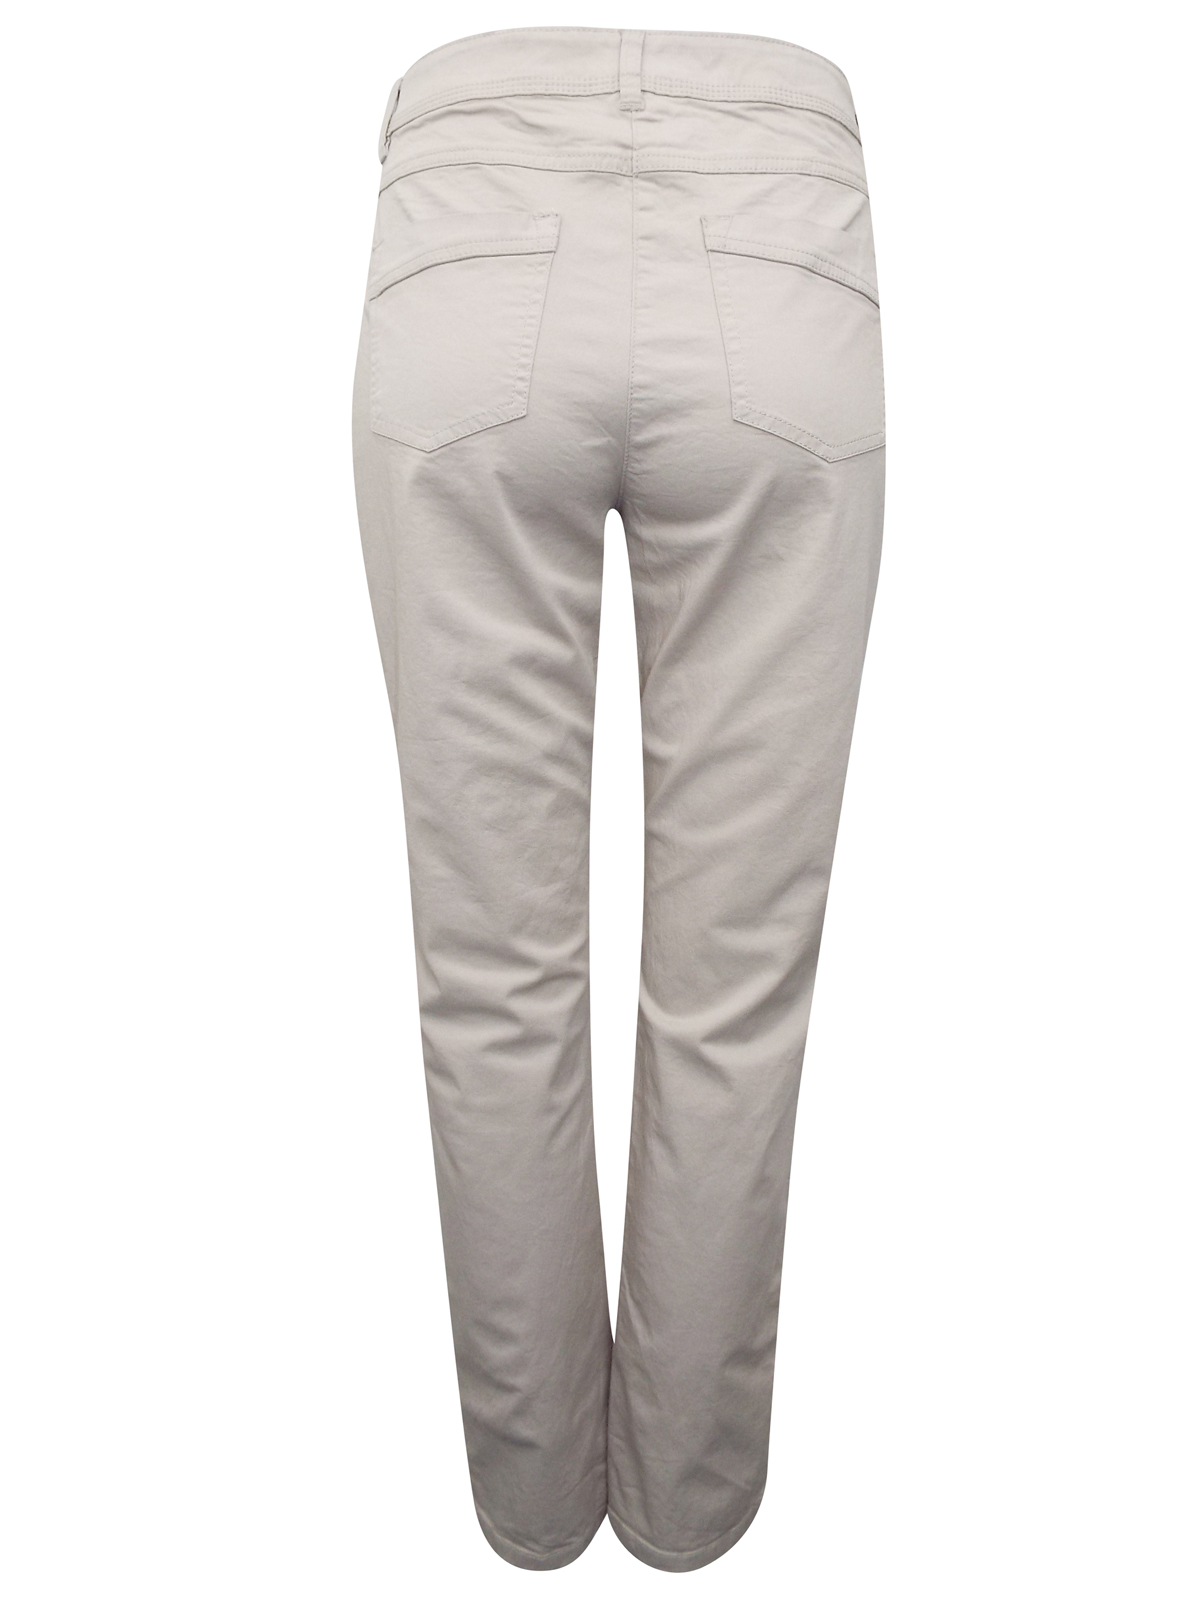 C&A - - C&A SAND Classic Fit 5-Pcoket Denim Jeans - Size 8 to 22 (EU 36 ...